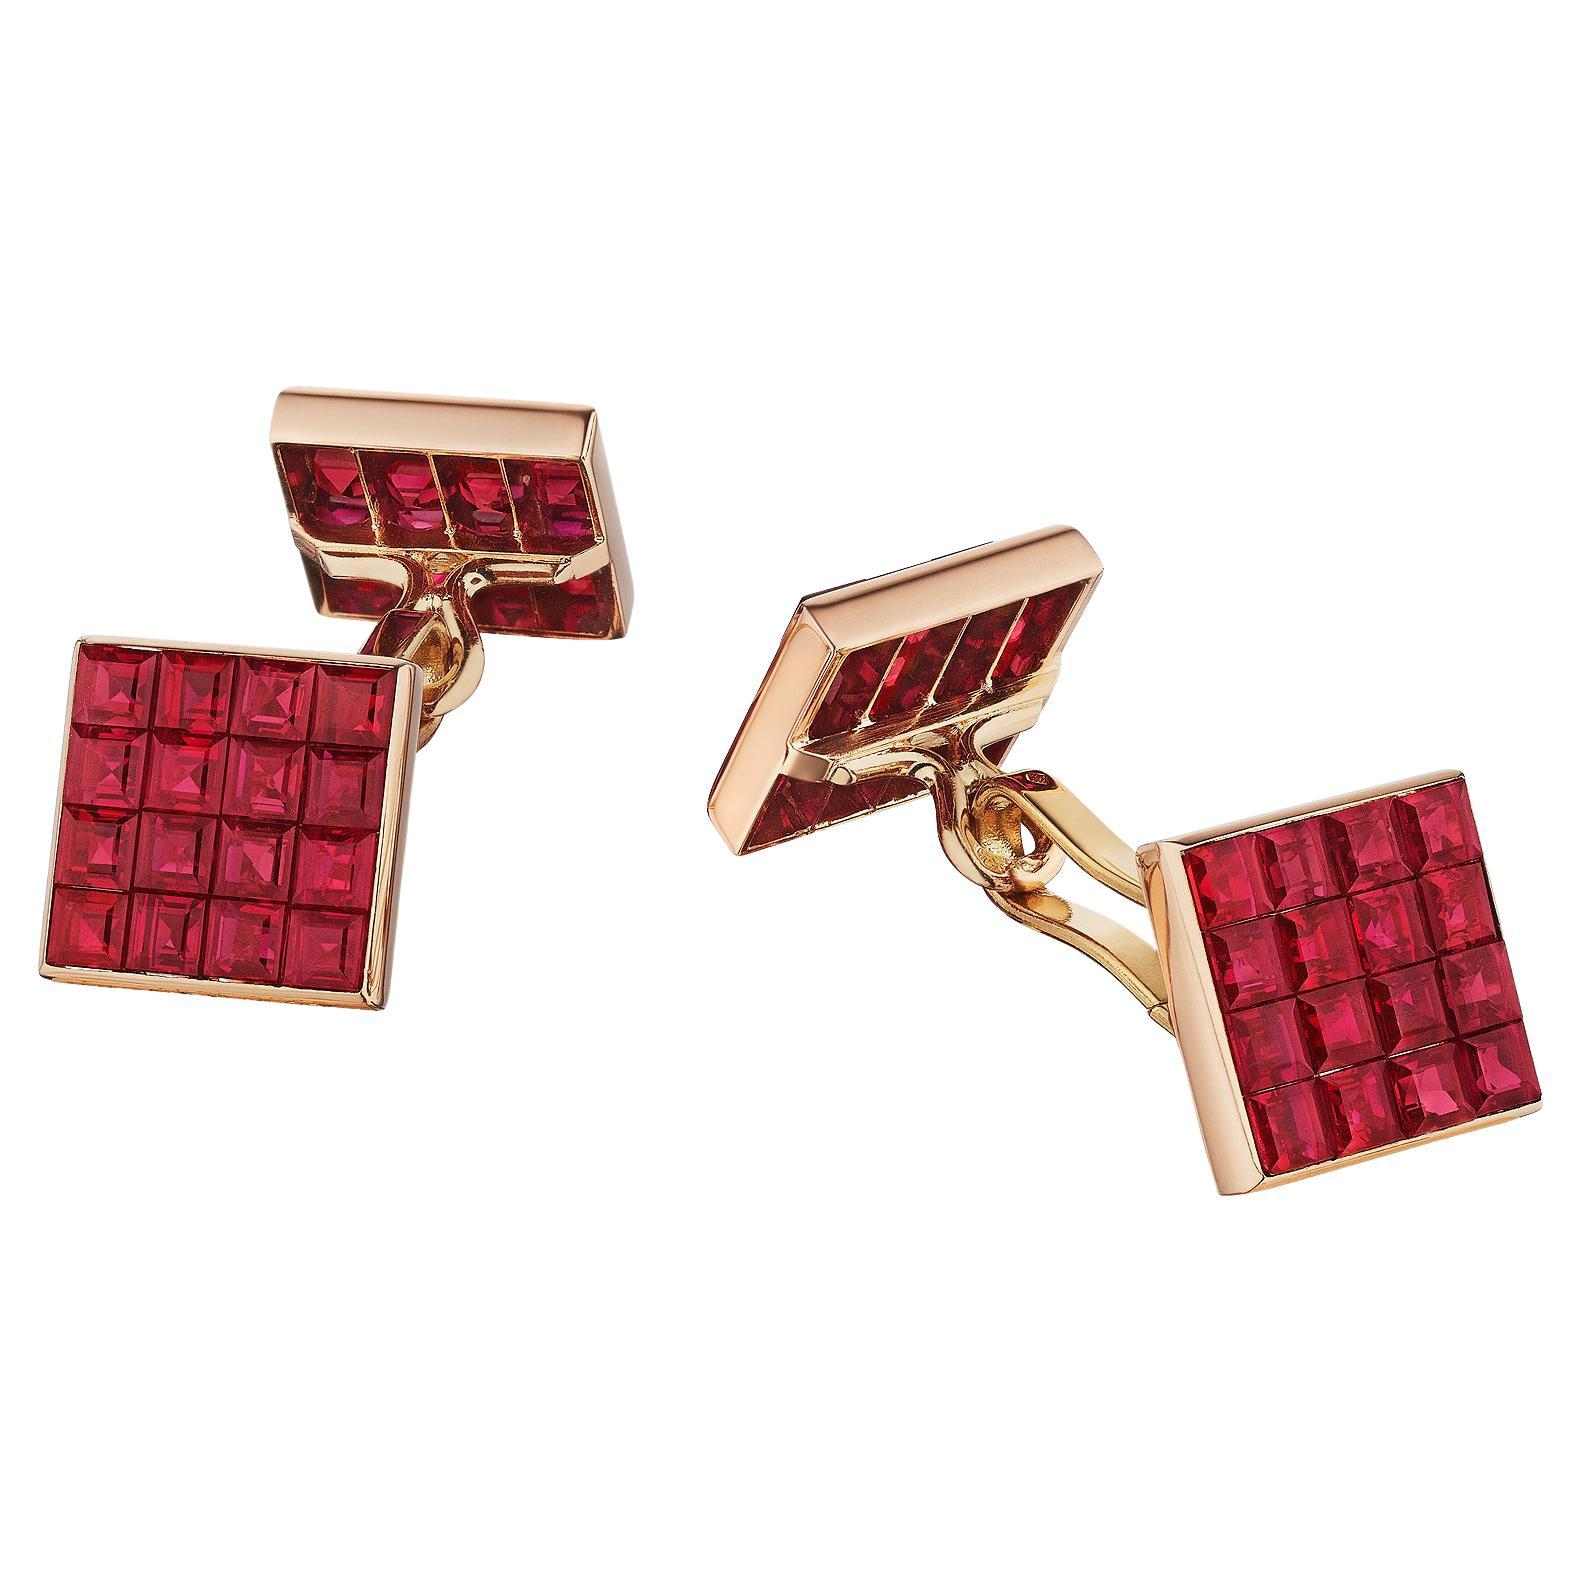 Van Cleef & Arpels Paris Modernist Invisibly Set Square Cut Ruby Gold Cufflinks